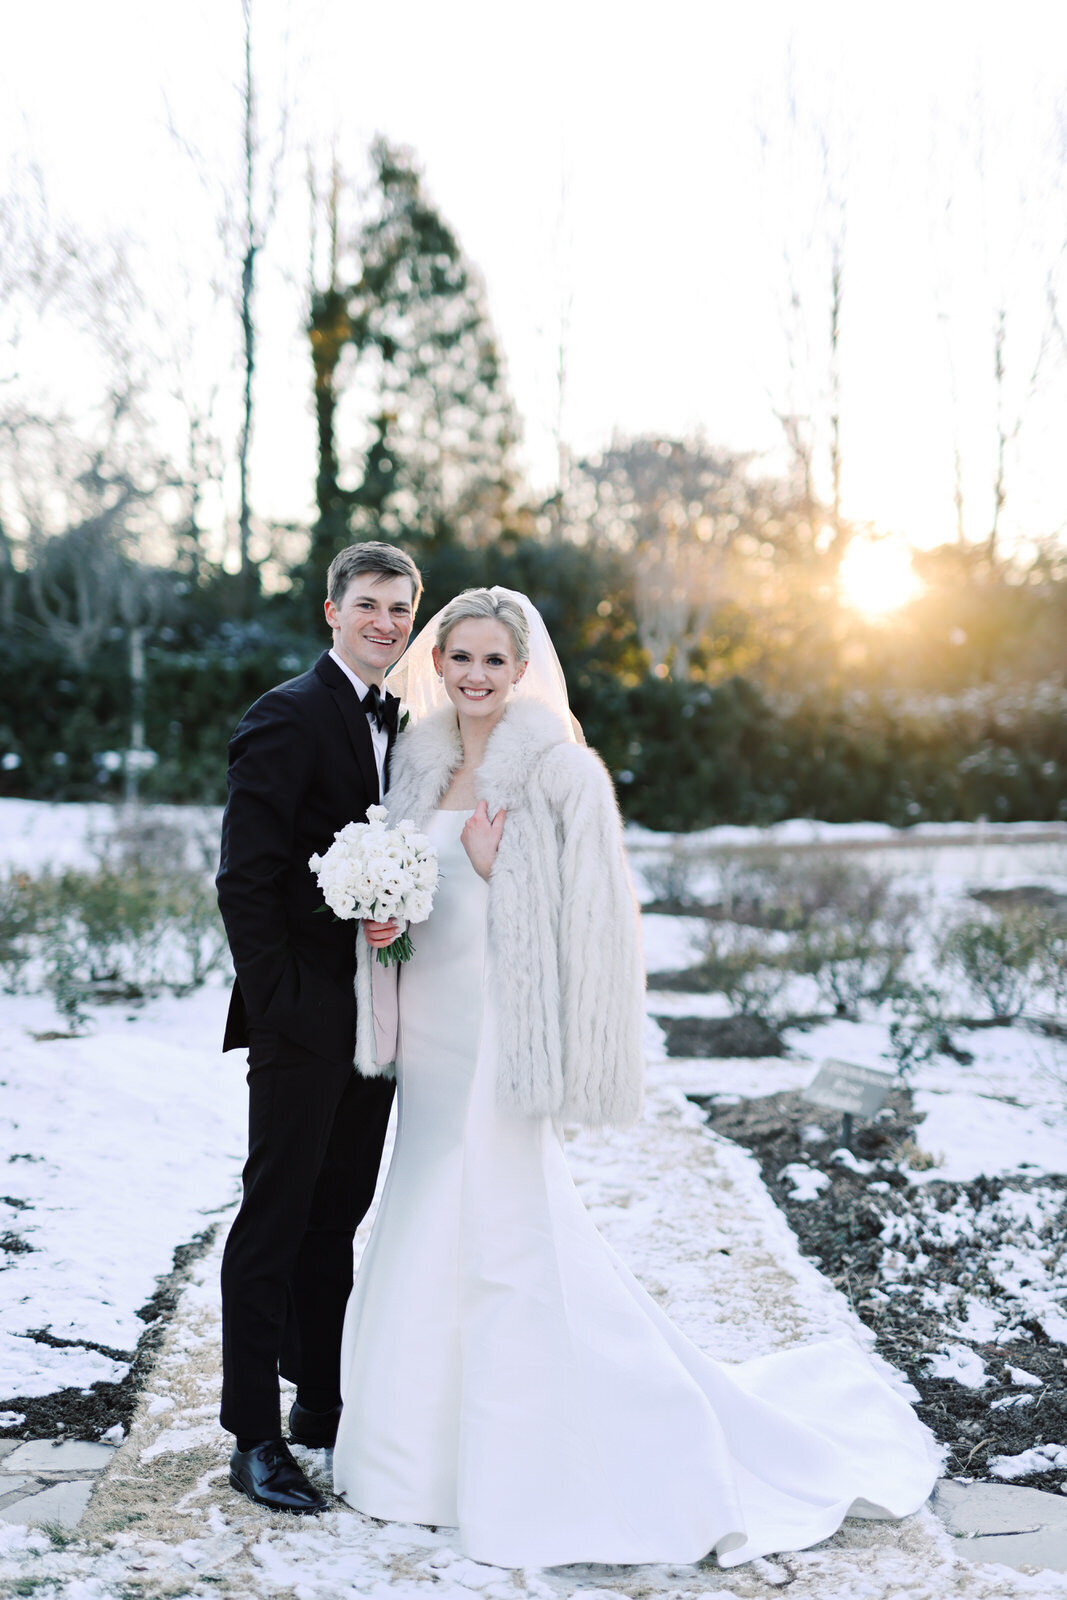 A Stylish and Fashion Inspired Winter Wedding 35